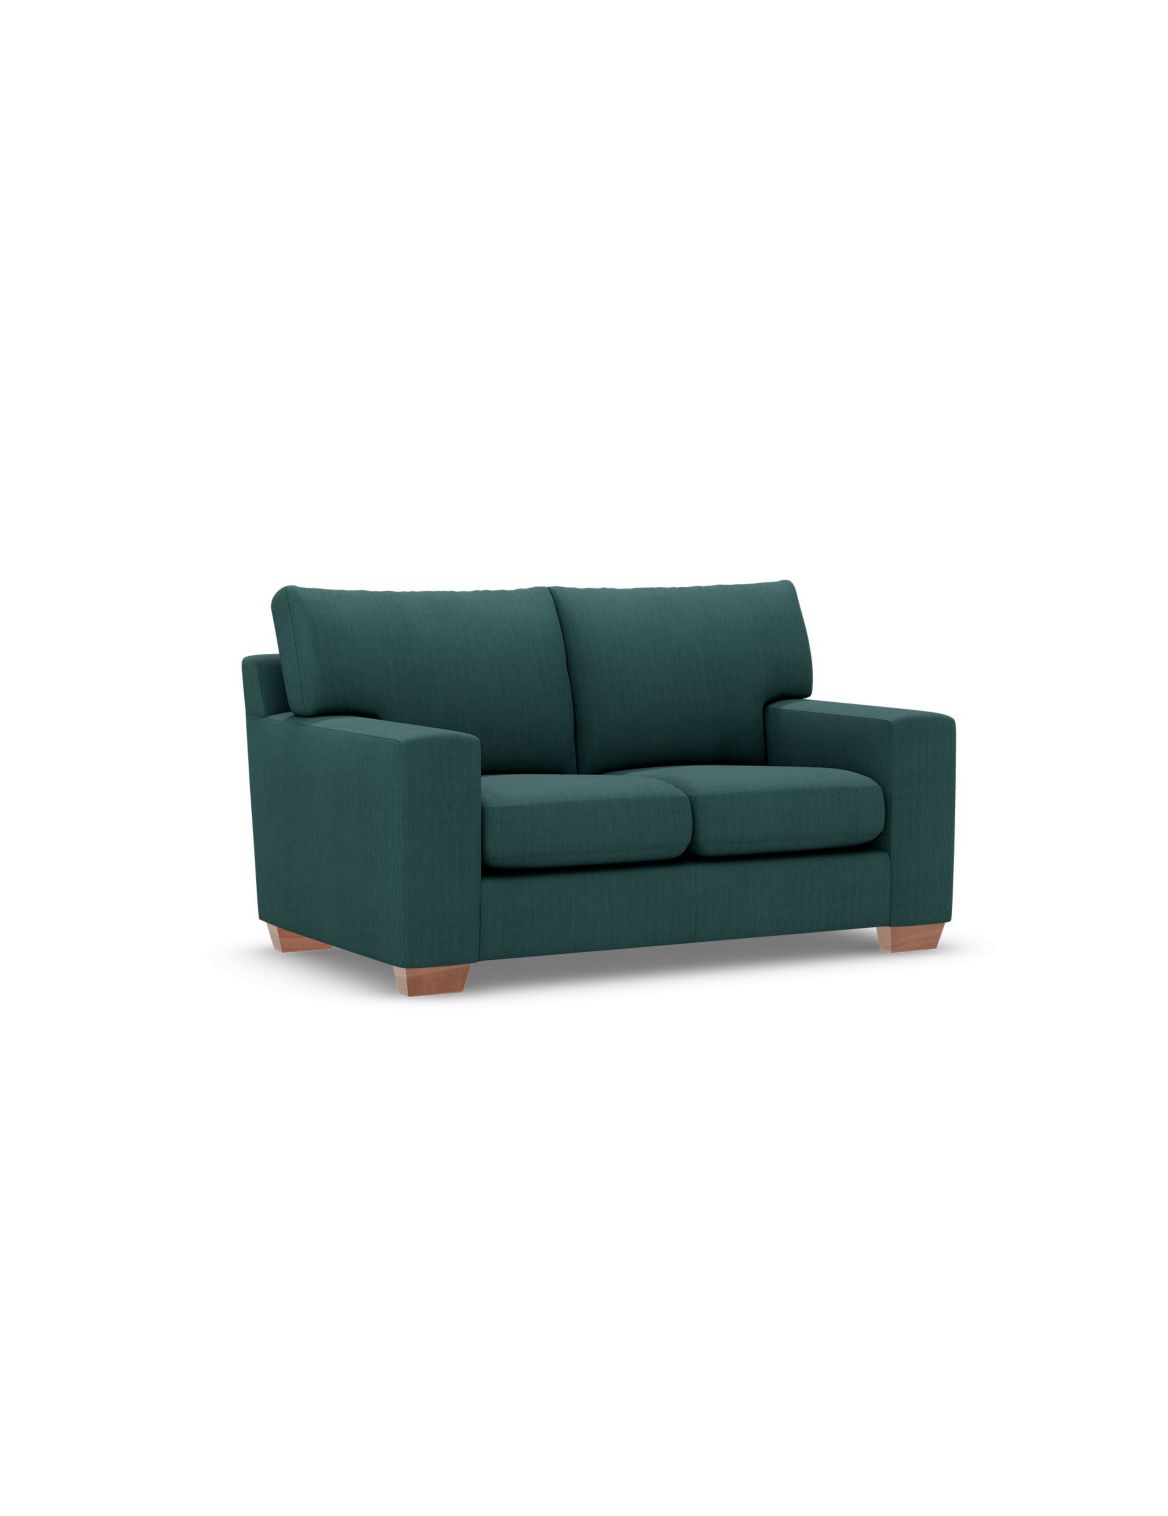 Alfie Compact Sofa green